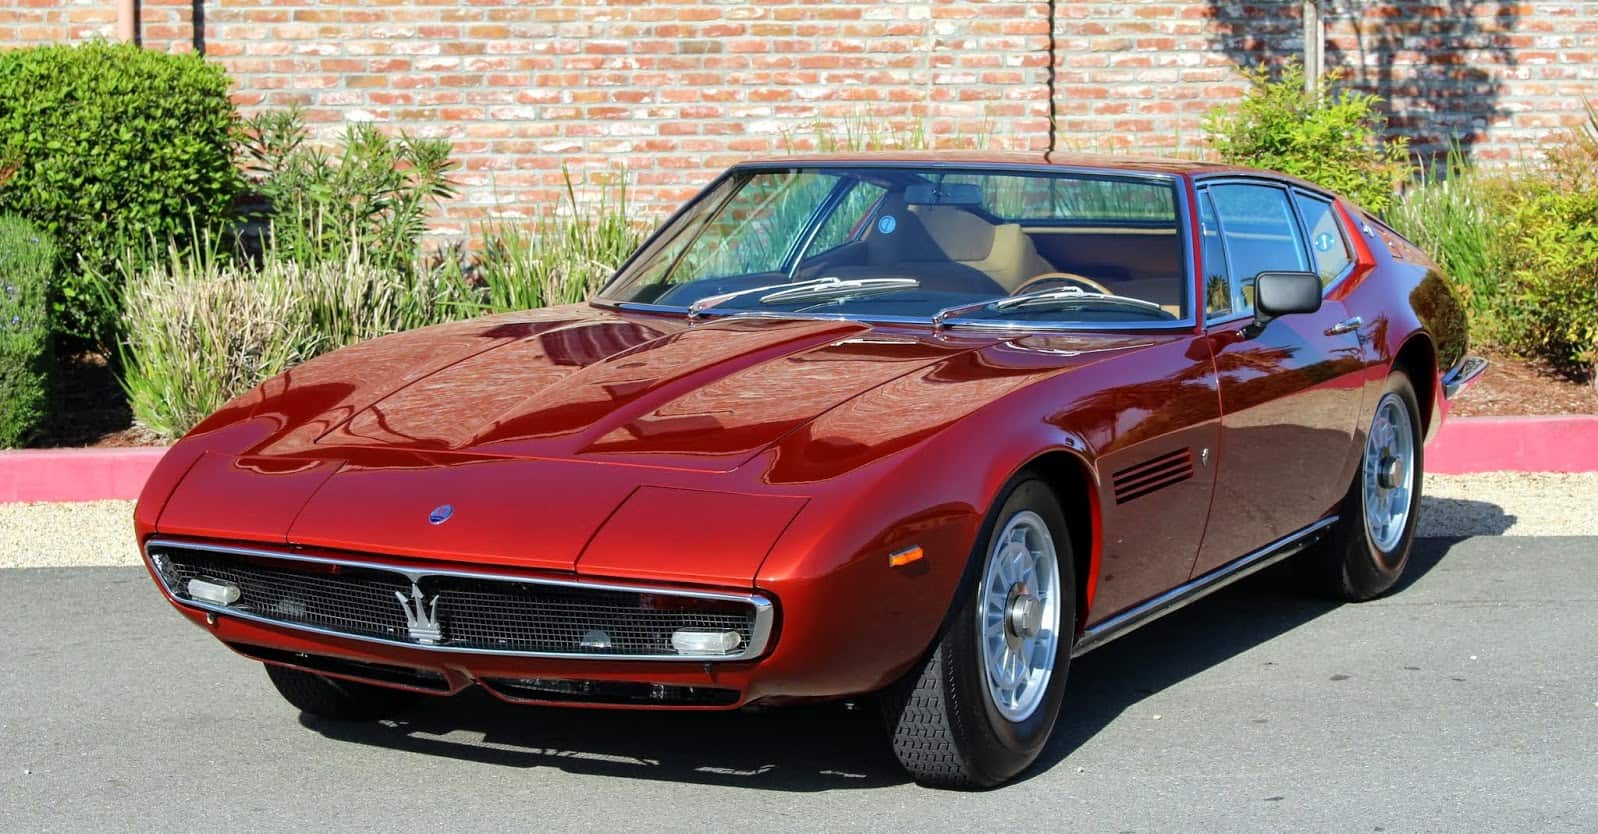 1967 Maserati Ghibli